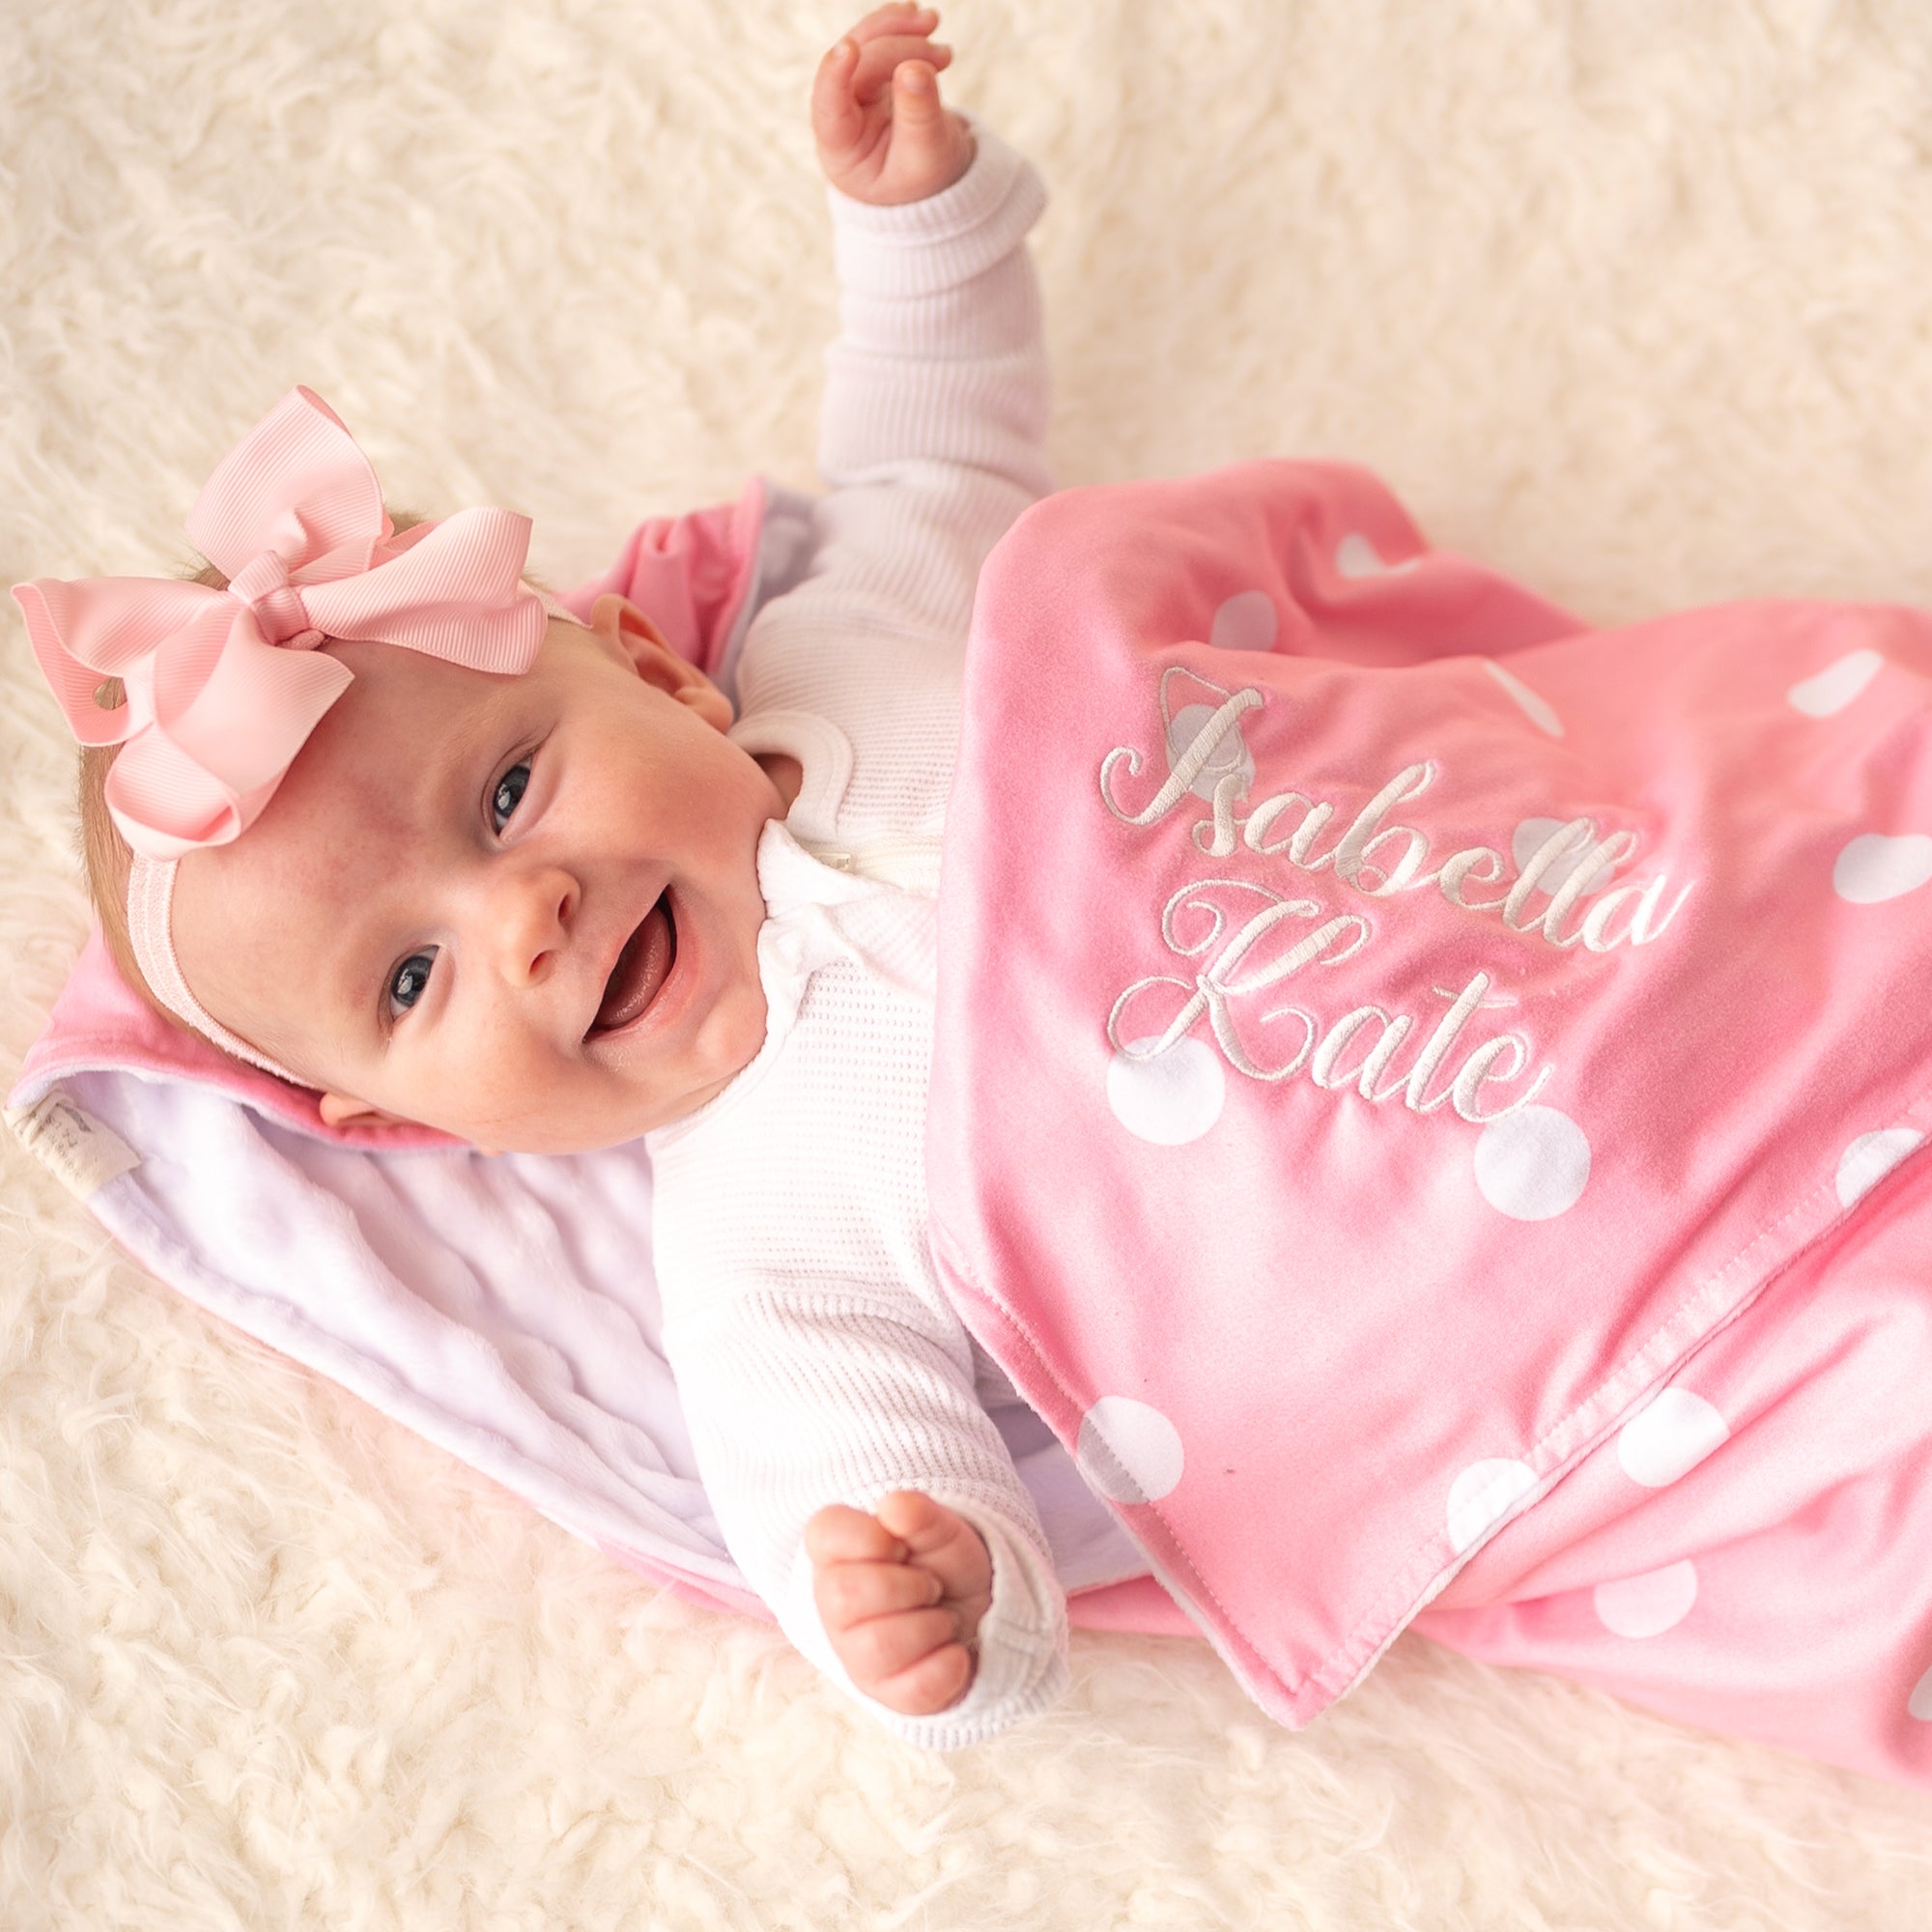 On Wednesdays We Wear Pink Burn Book Font Baby Blanket - Mean Girls Costume  - Baby Blankets sold by Juieta-Incompatible, SKU 855035